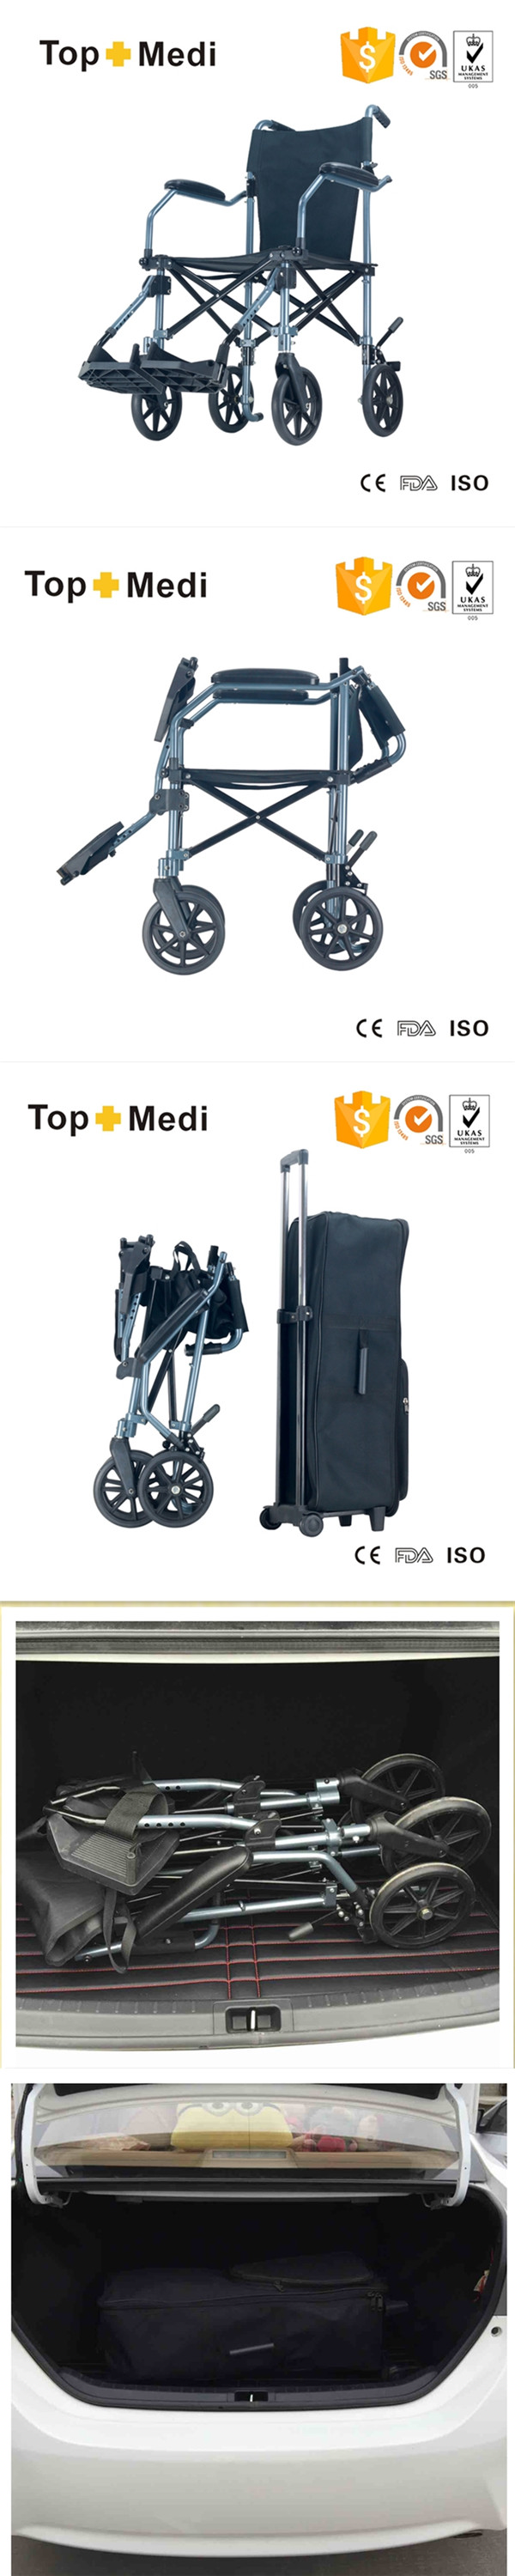 Topmedi Aluminum Lightweight Folding Portable Travel Manual Wheelchair as Luggage